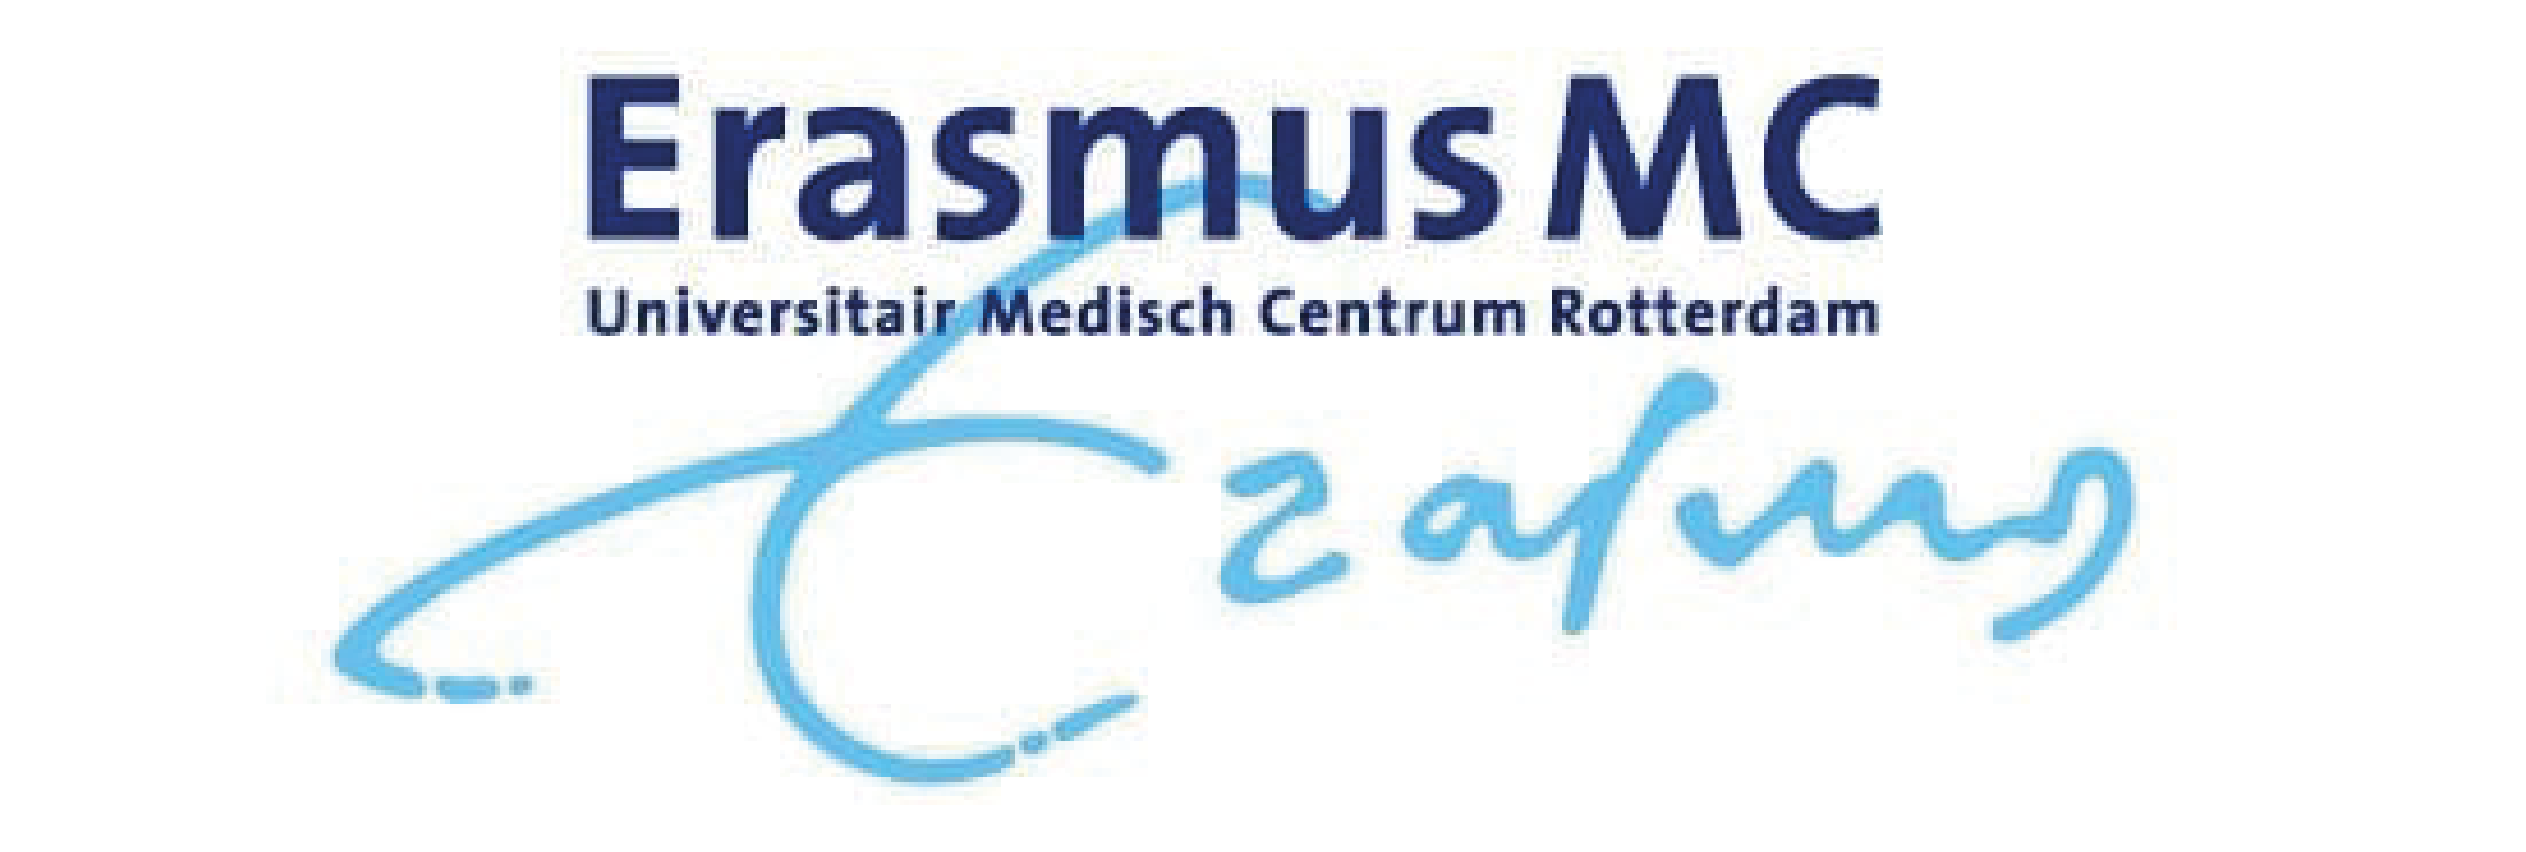 Erasmus MC Logo